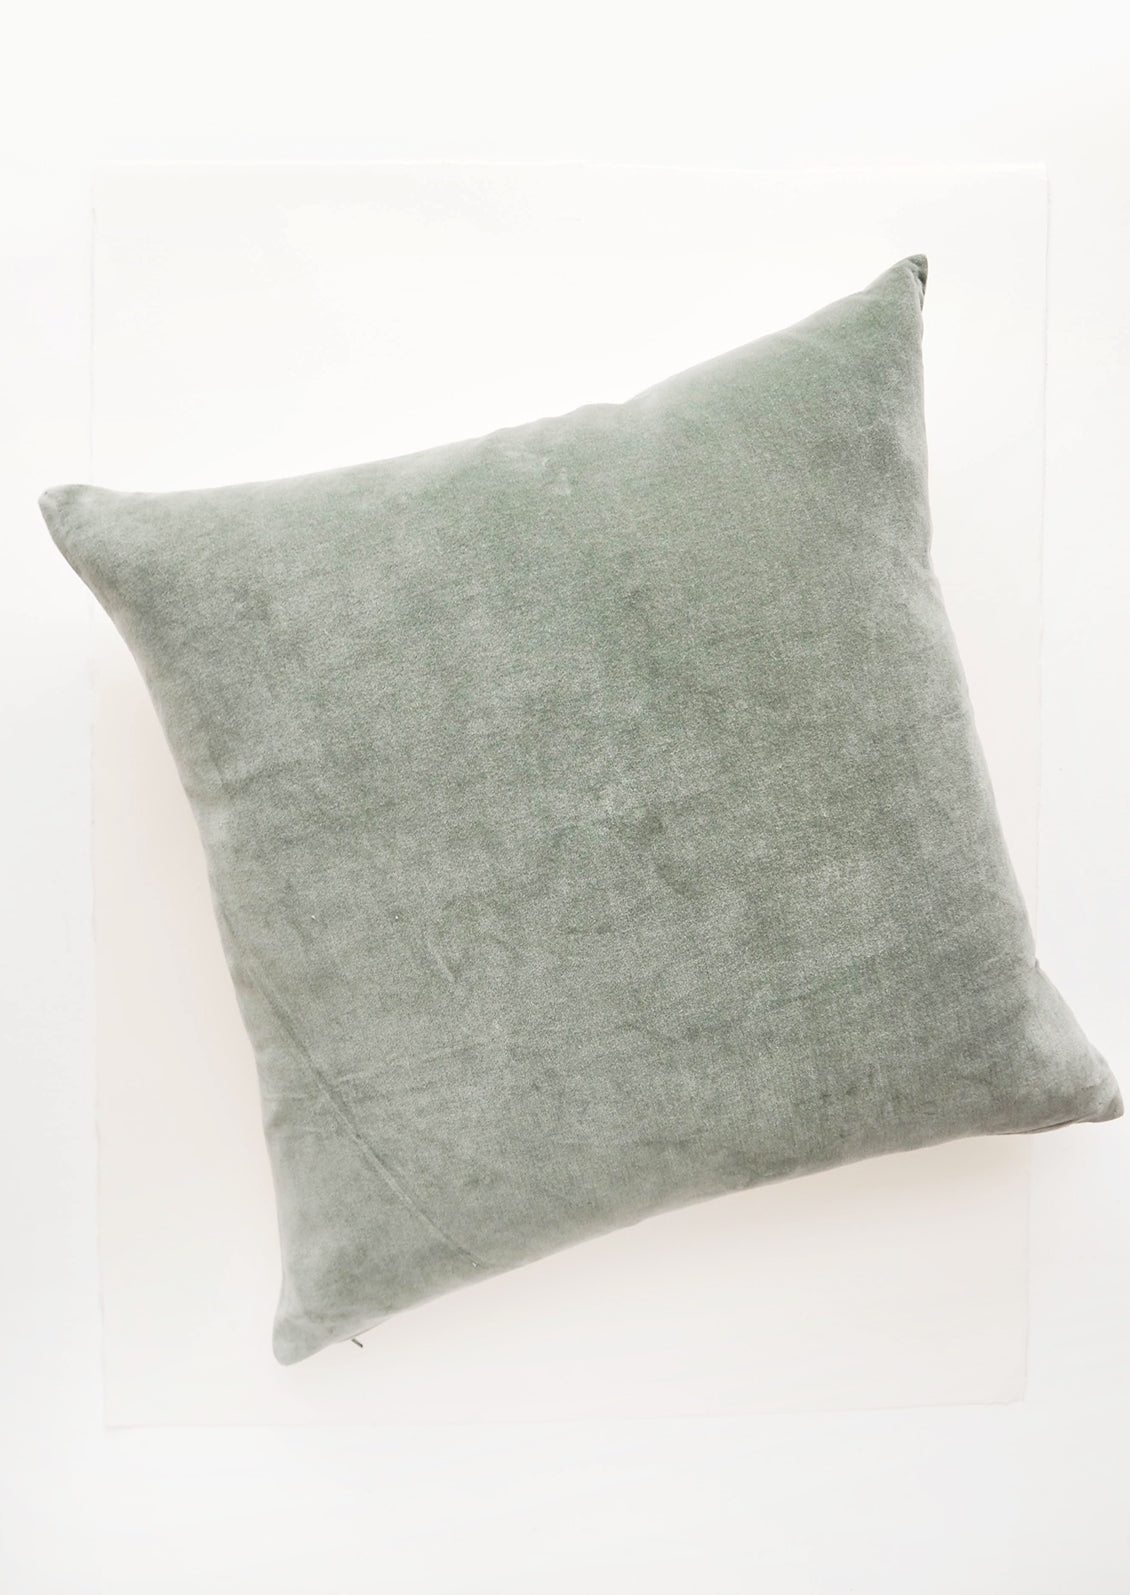 A square velvet throw pillow in celadon.